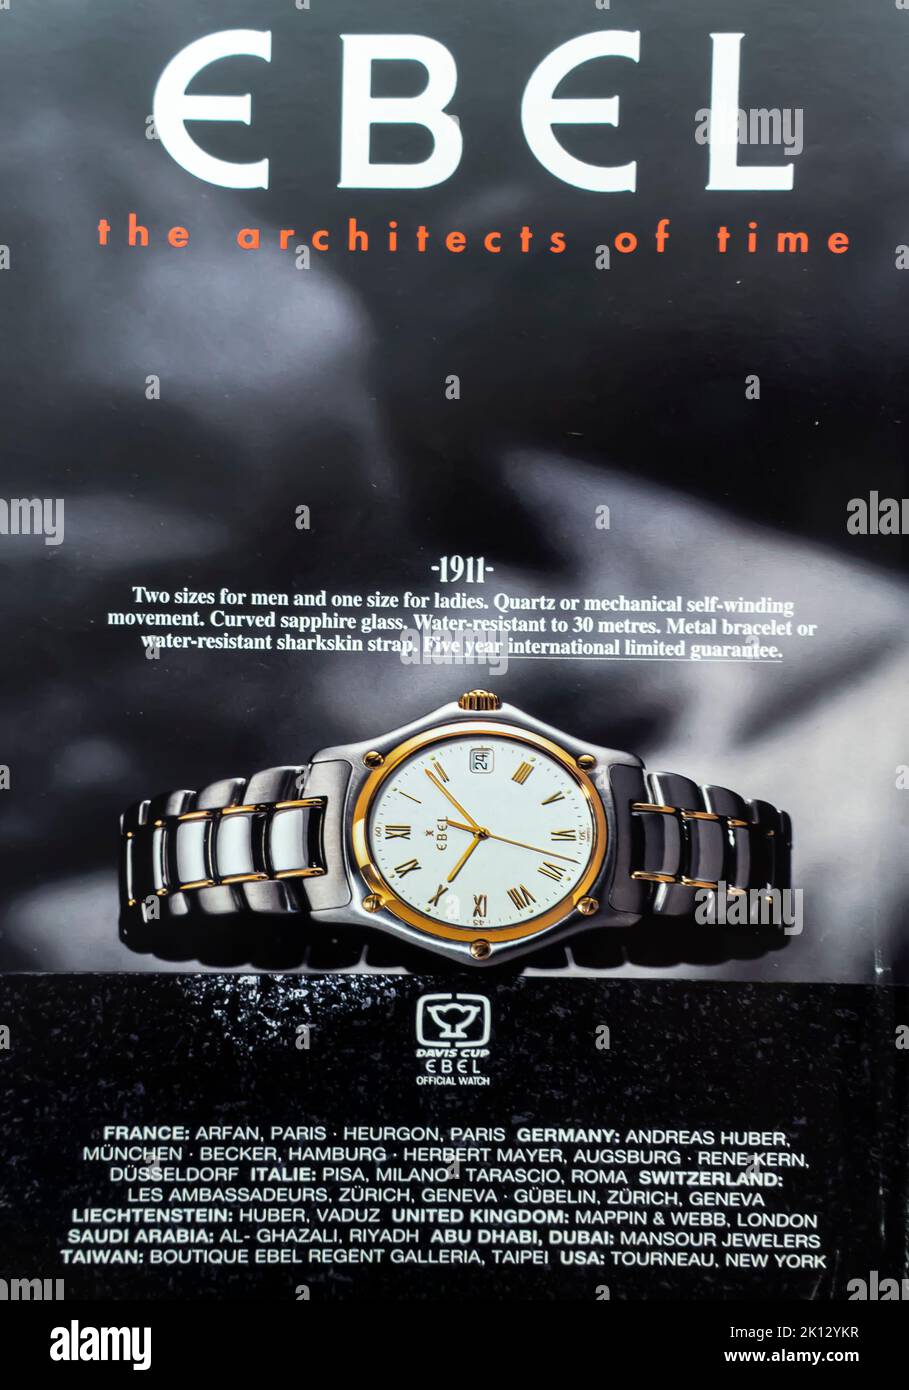 Ebel 1911 watch advertisement placed inside a NatGeo magazine, 1994 Stock Photo